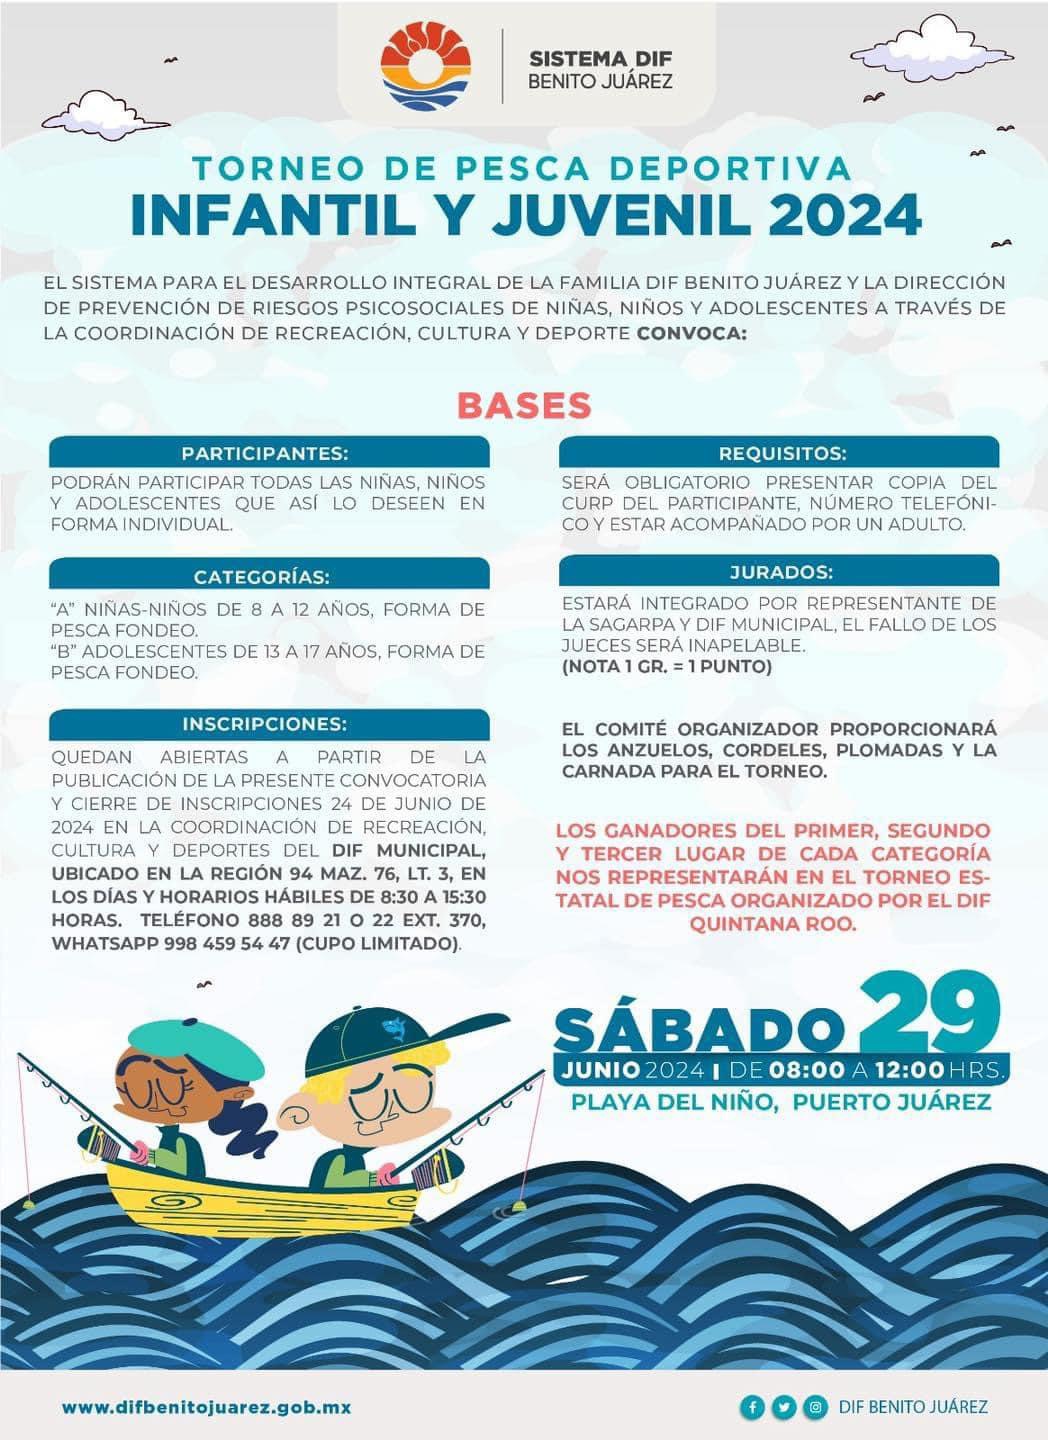 Torneo de Pesca Deportiva infantil y juvenil 2024 image